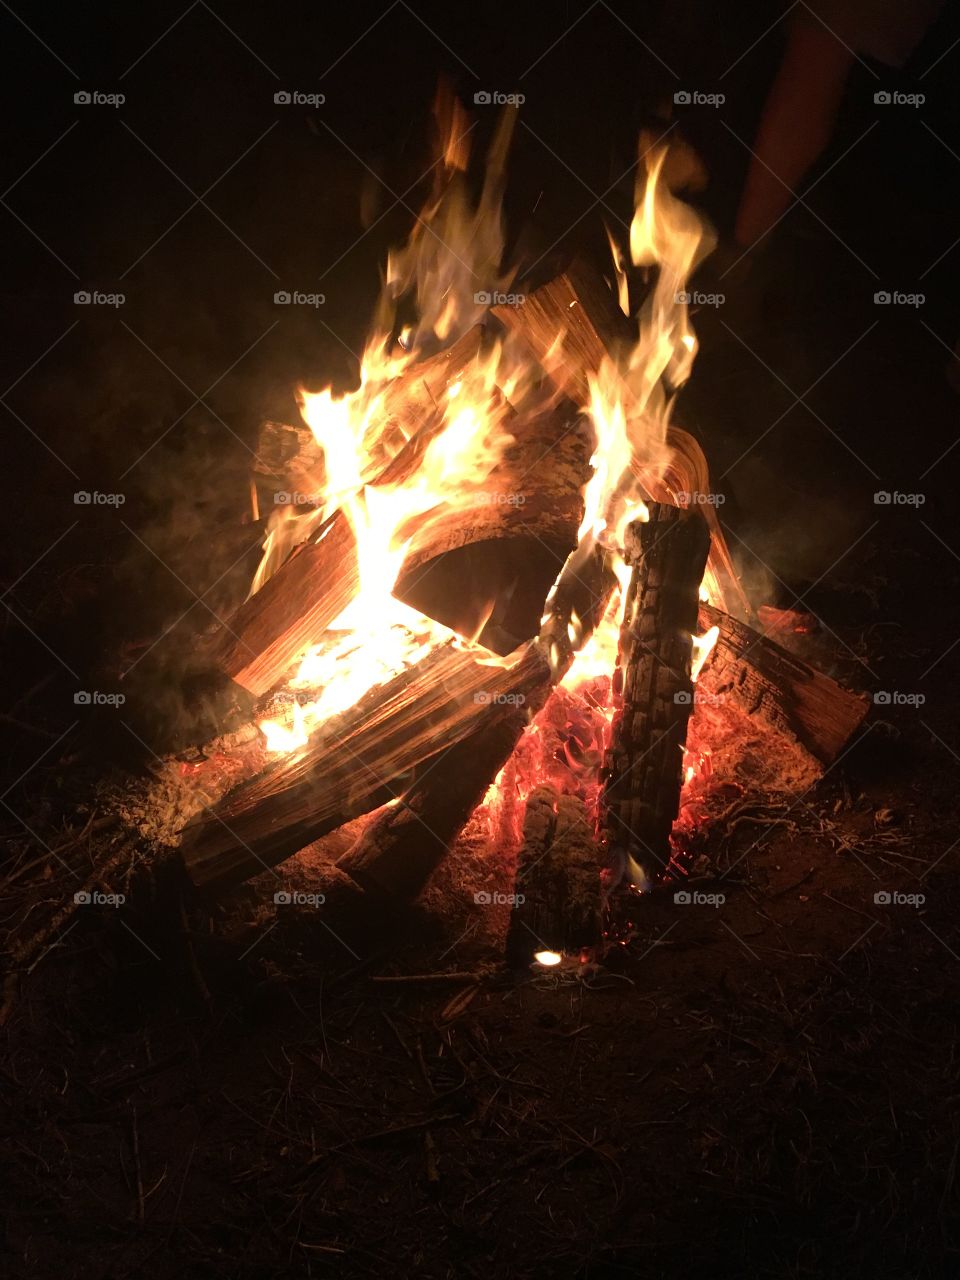 Flame, Bonfire, Campfire, Hot, Fireplace